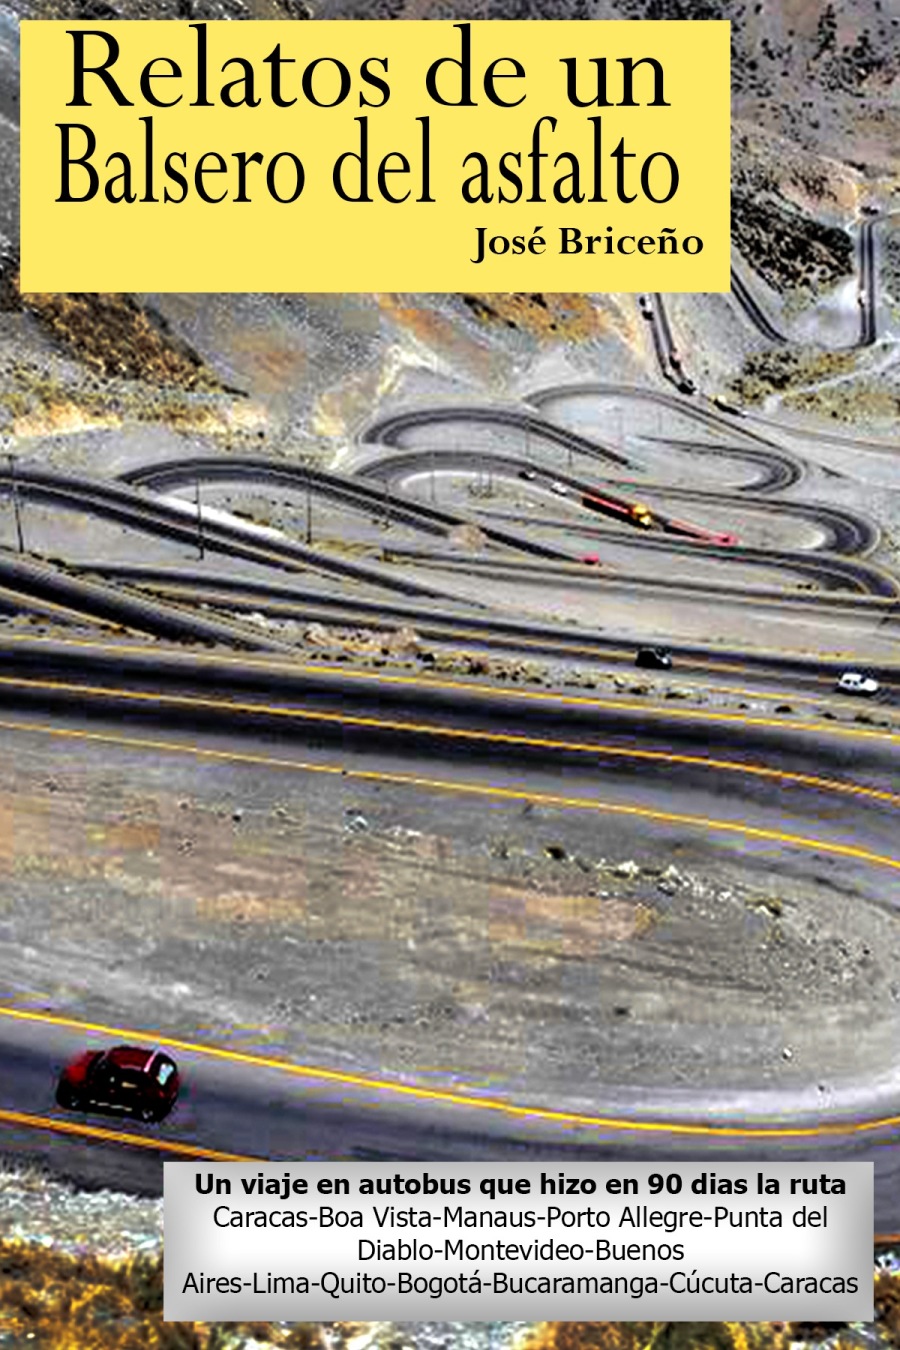 | Relatos de un
Balsero del asfalto

José Briceio

  

 

a en autobus que hizo en 90 dias la ruta
Sa Caracas-Boa Vista-Manaus-Porto Allegre-Punta del

Diablo-Montevideo-Buenos "
Aires-Lima-Quito-Bogota-Bucaramanga-Cucuta-Caracas